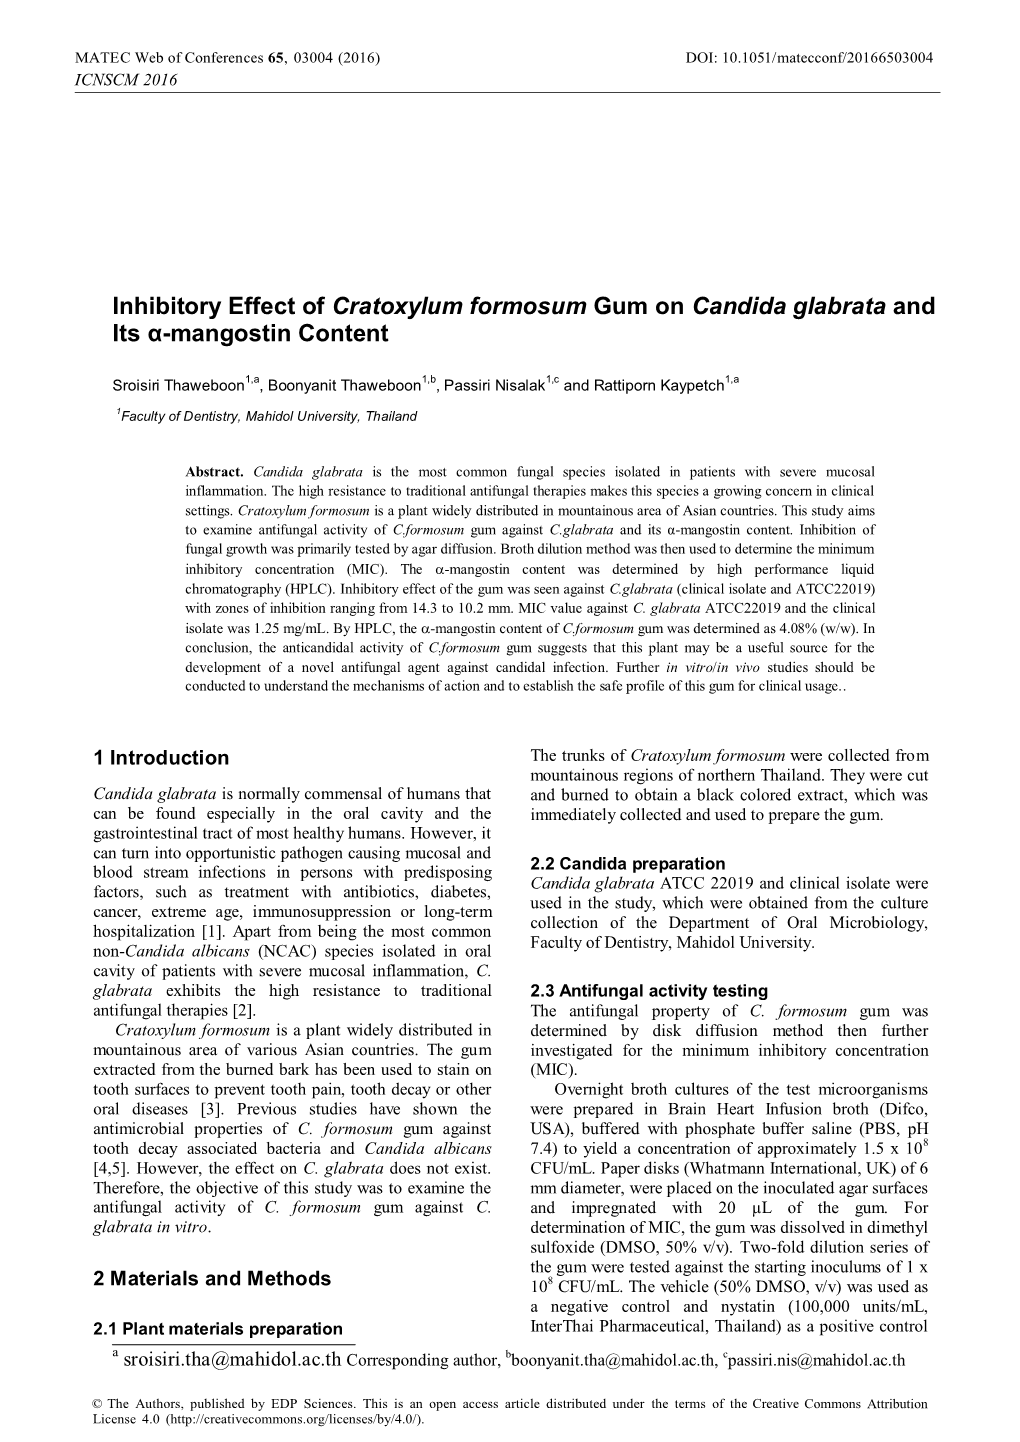 Inhibitory Effect of Cratoxylum Formosum Gum on Candida Glabrata and Its Α-Mangostin Content